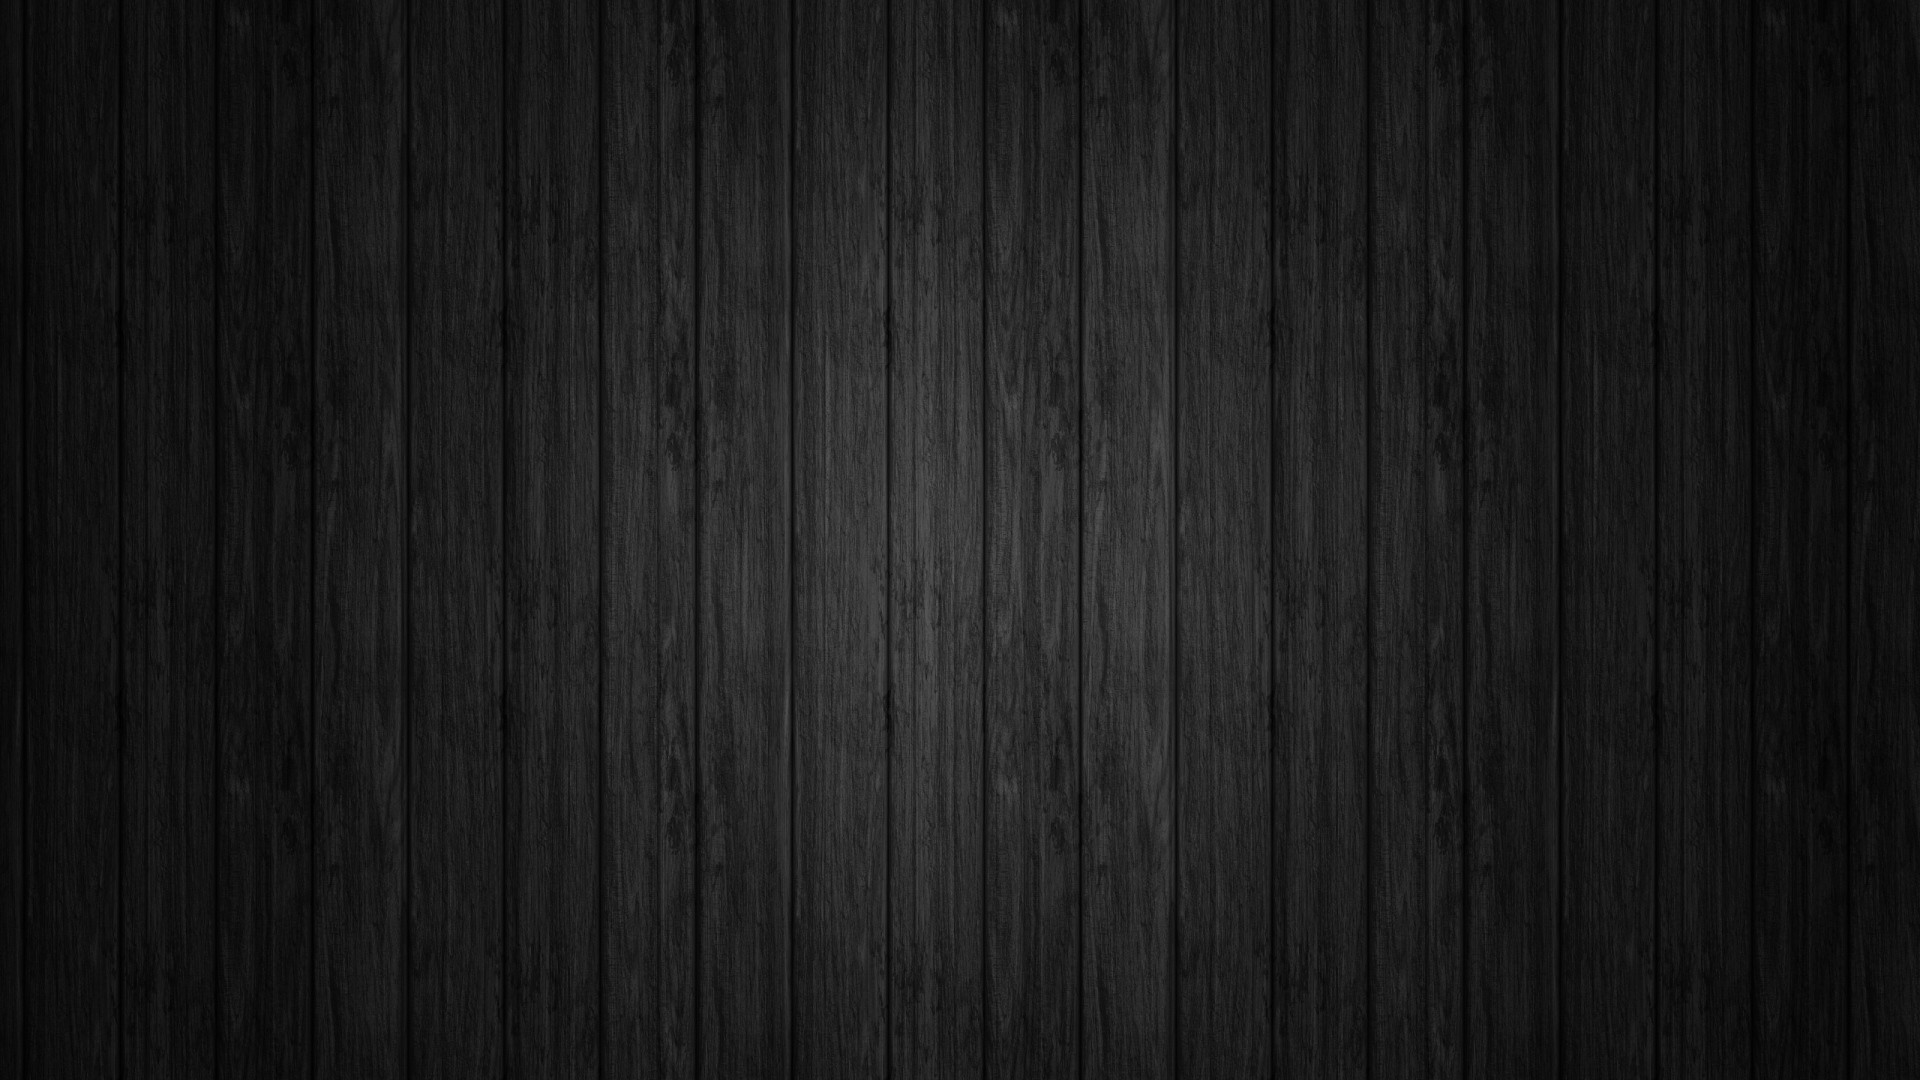 1920x1080 Black-gray wooden desktop background: